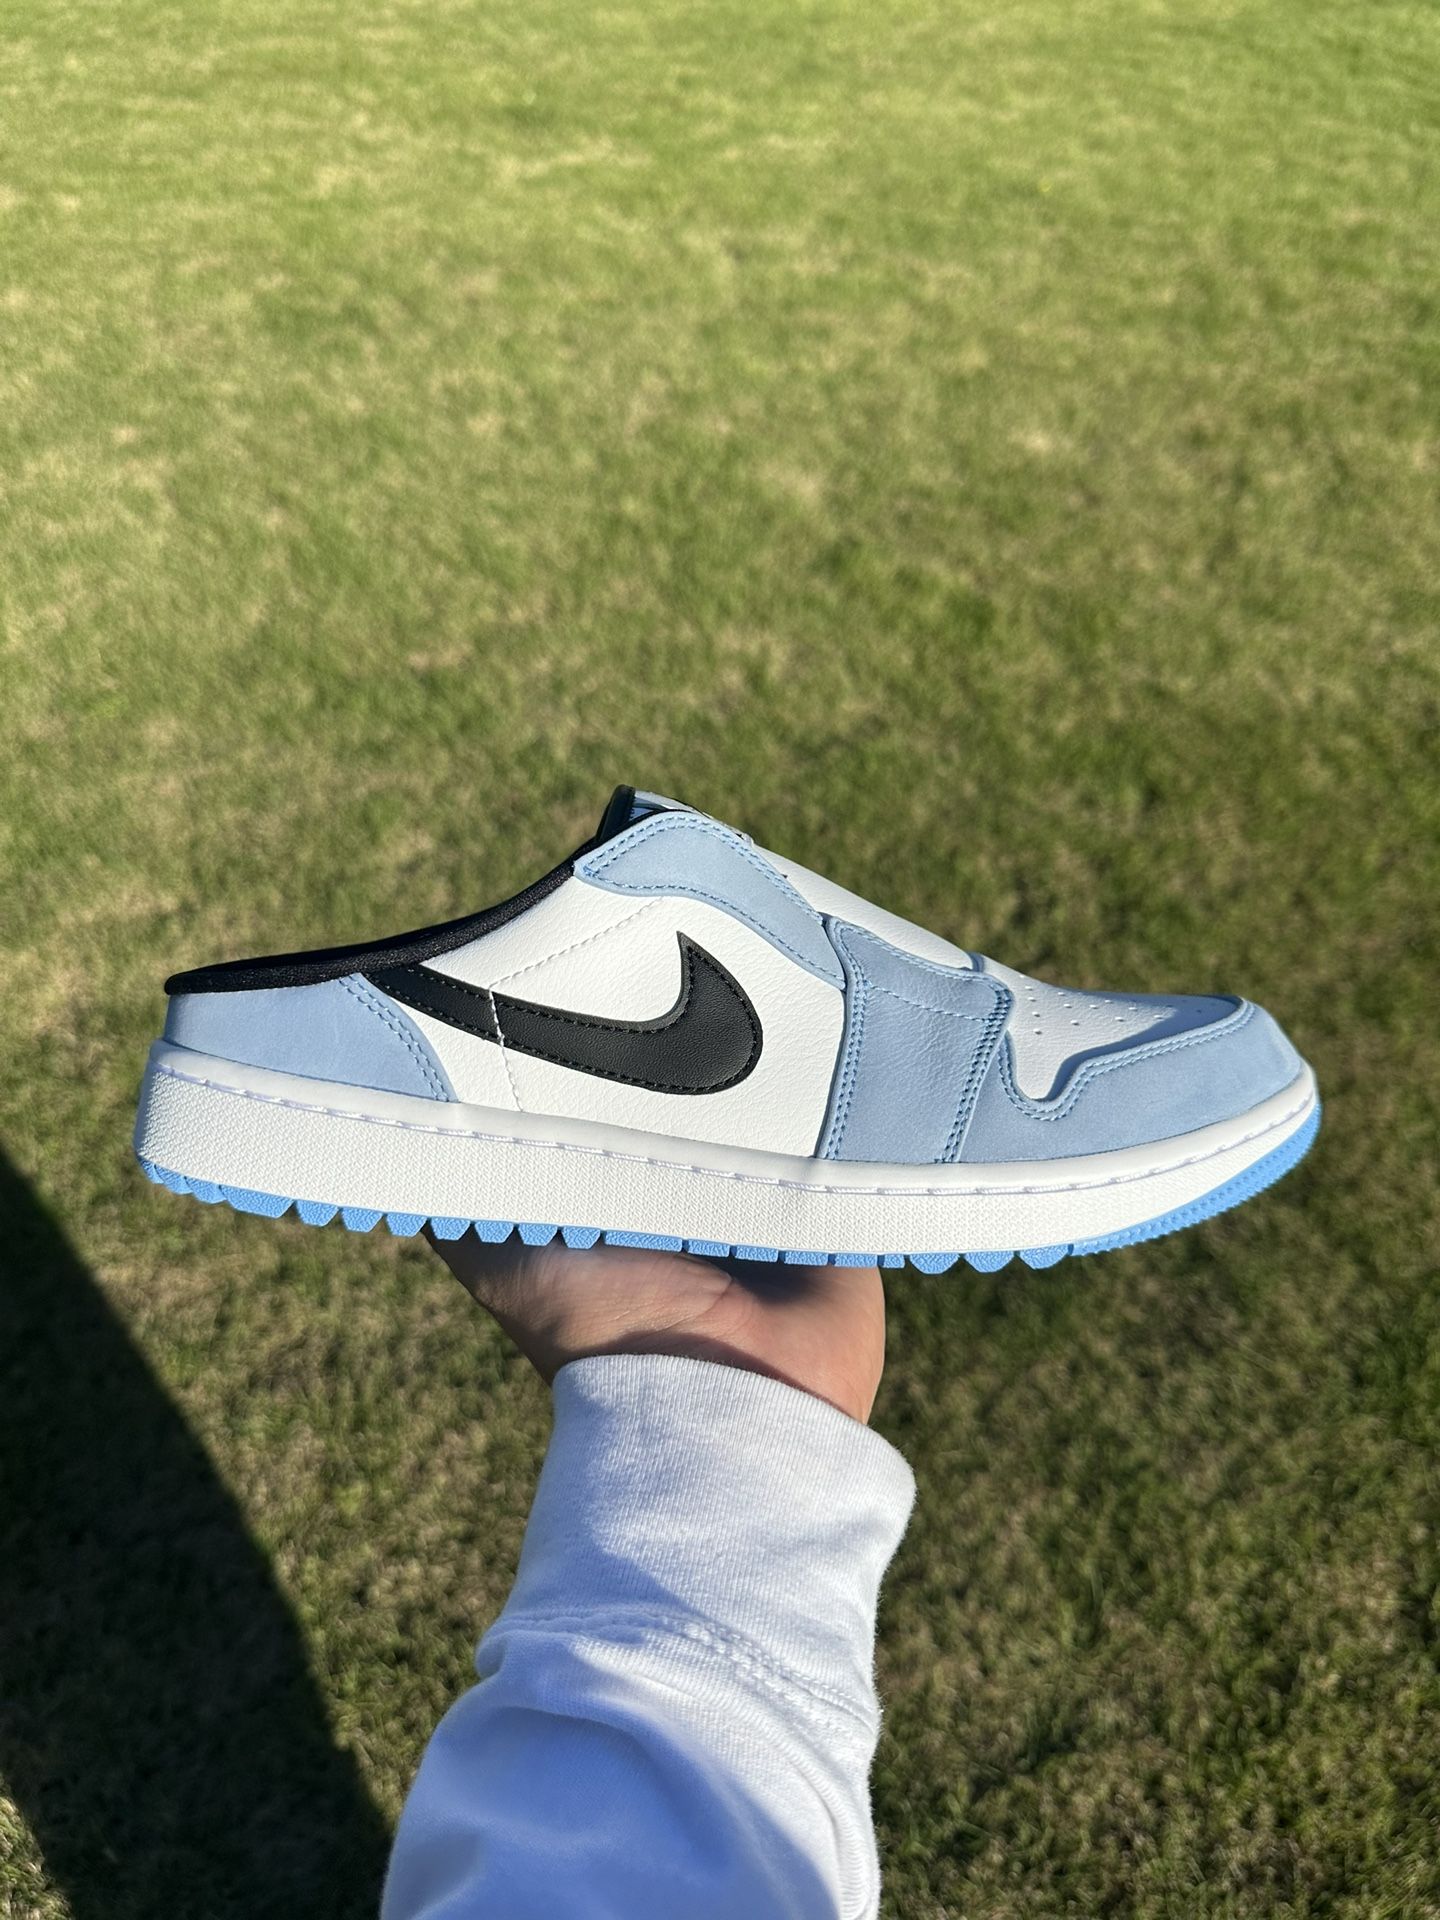 Nike Air Jordan Mule Golf Shoes 'University Blue' - Size 10 (FJ1214-400)